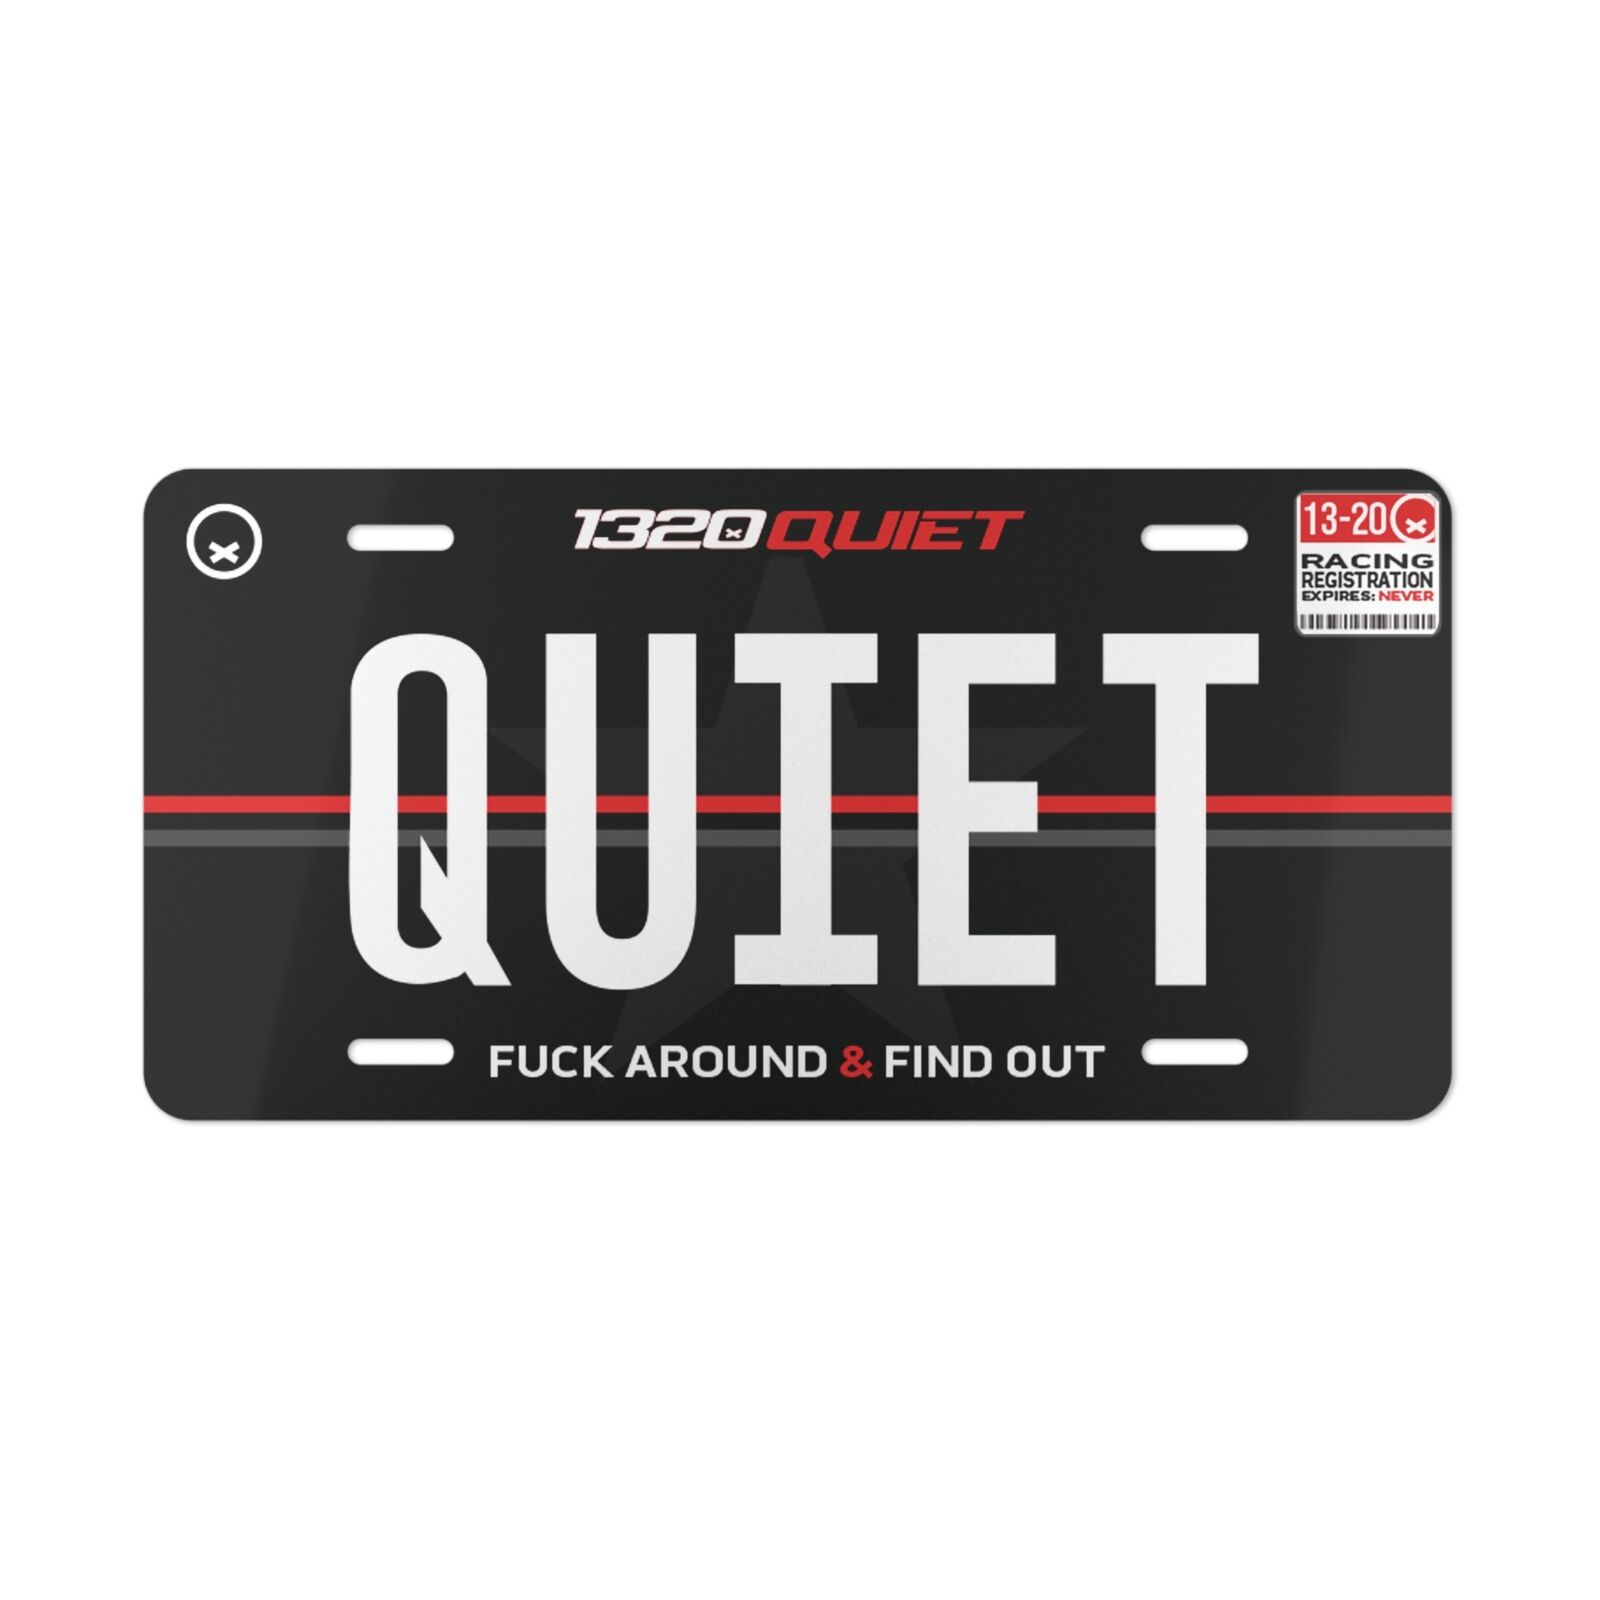 Quiet Racing Club x 1320 Video - Racing Car Vanity Aluminium Lisence Plate